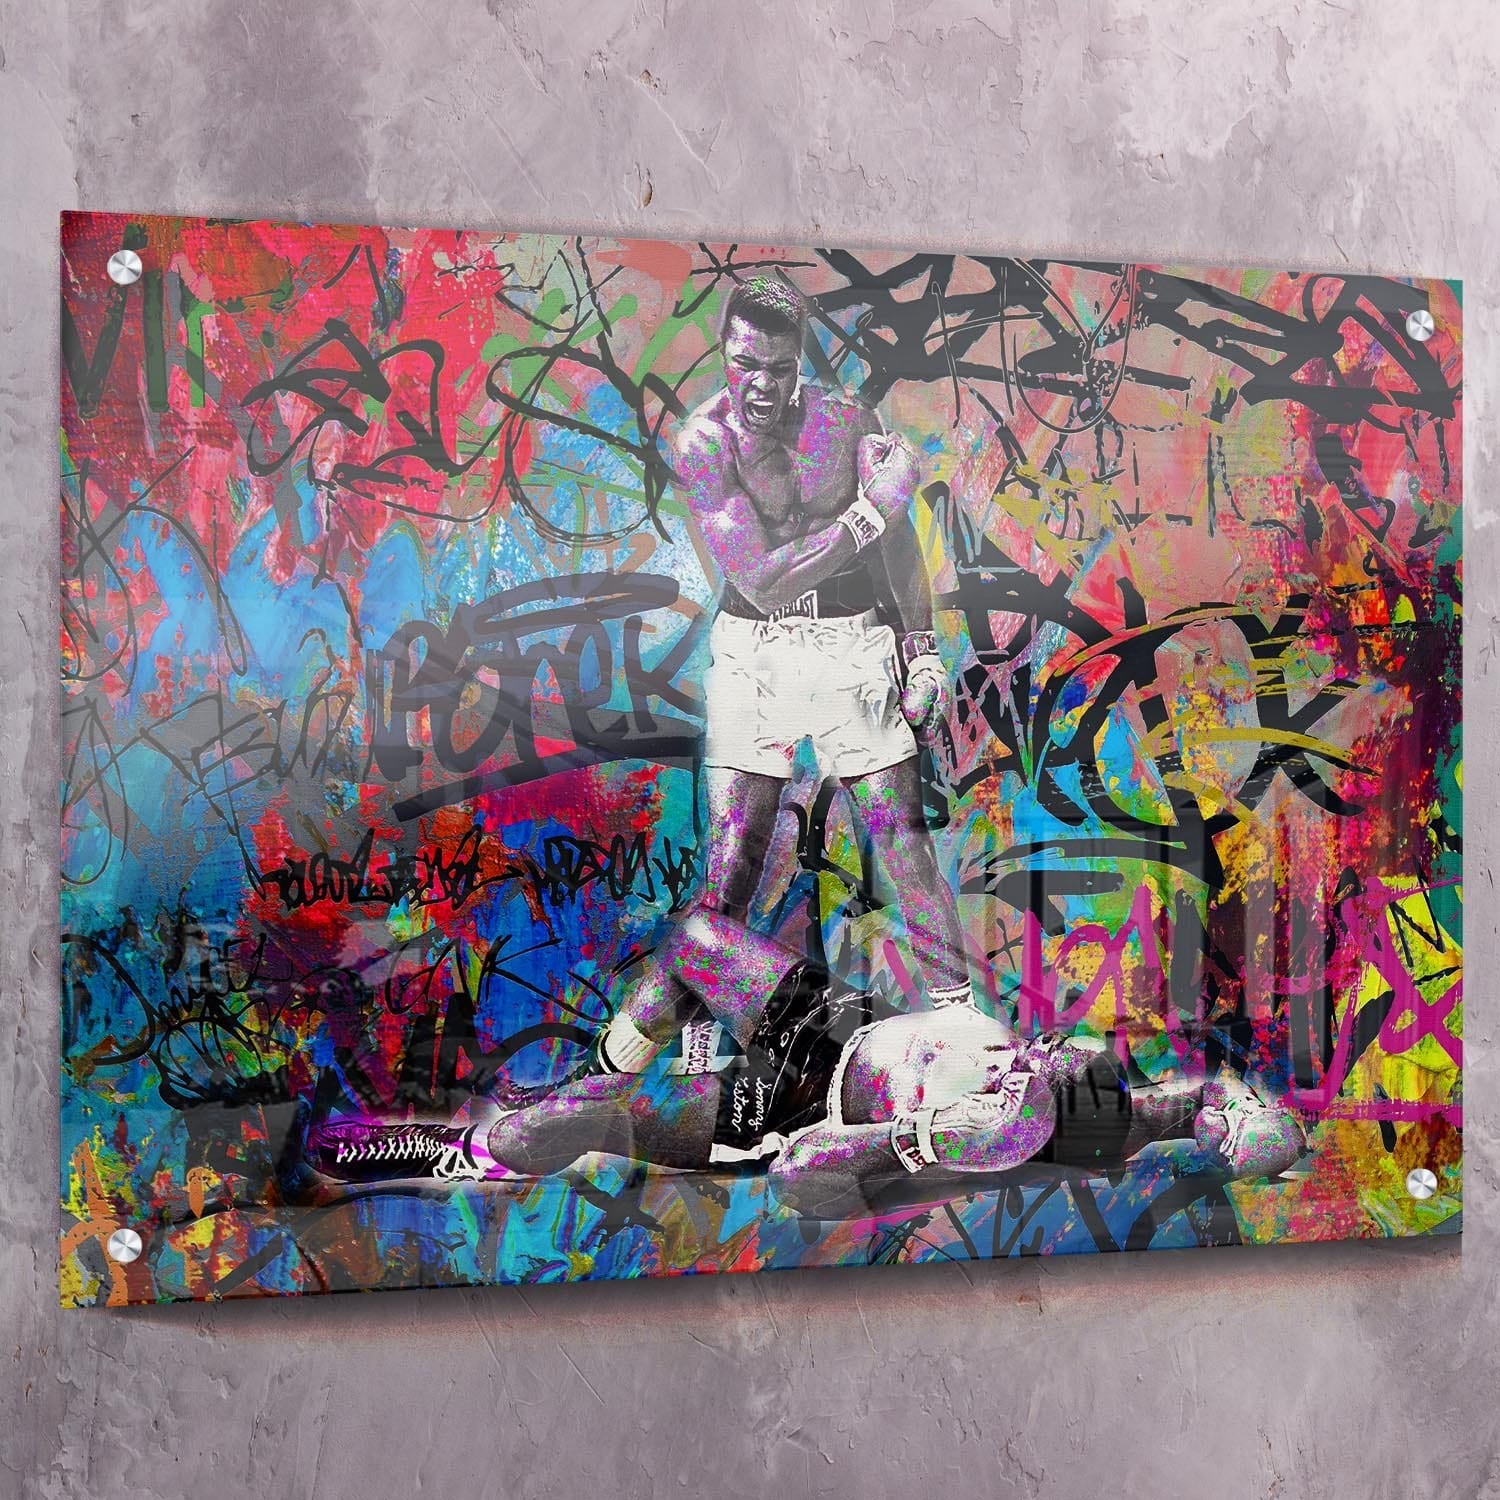 Muhammad Ali Graffiti Art | Inspirational Wall Art | ImpaktMaker Canvas Art Landscape